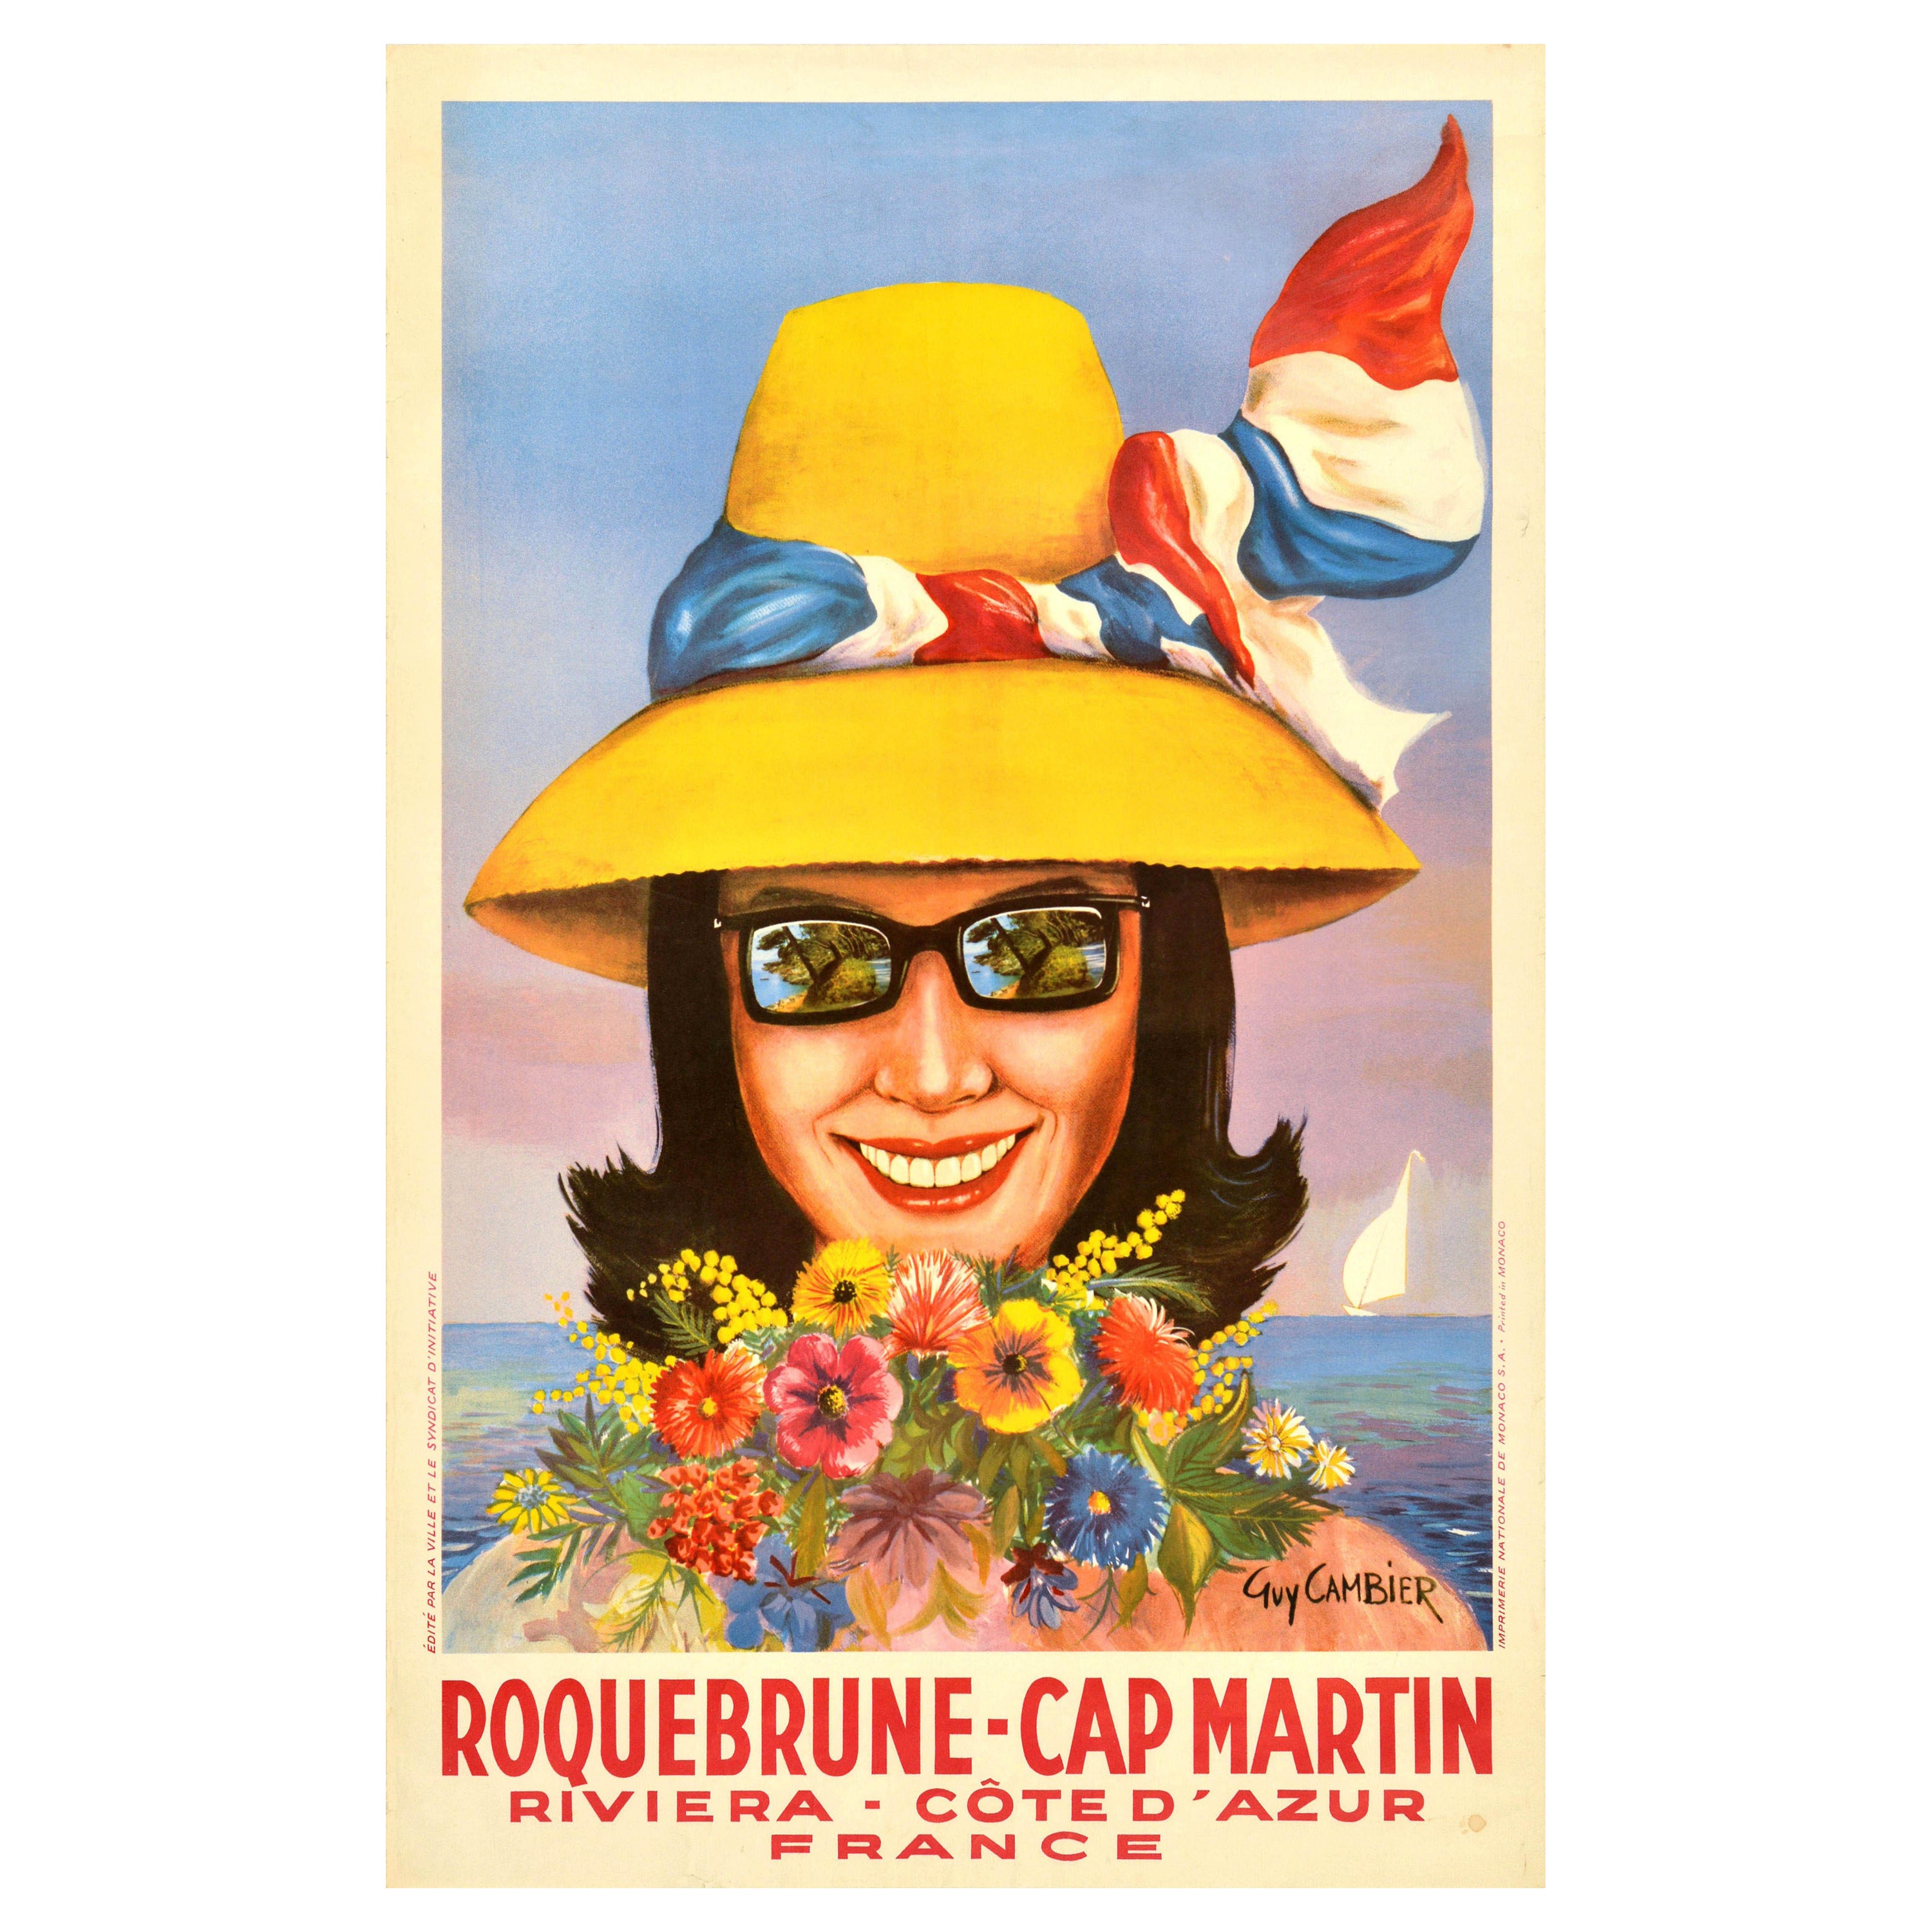 Original Vintage Travel Poster Roquebrune Cap Martin Riviera Cote d'Azur France For Sale